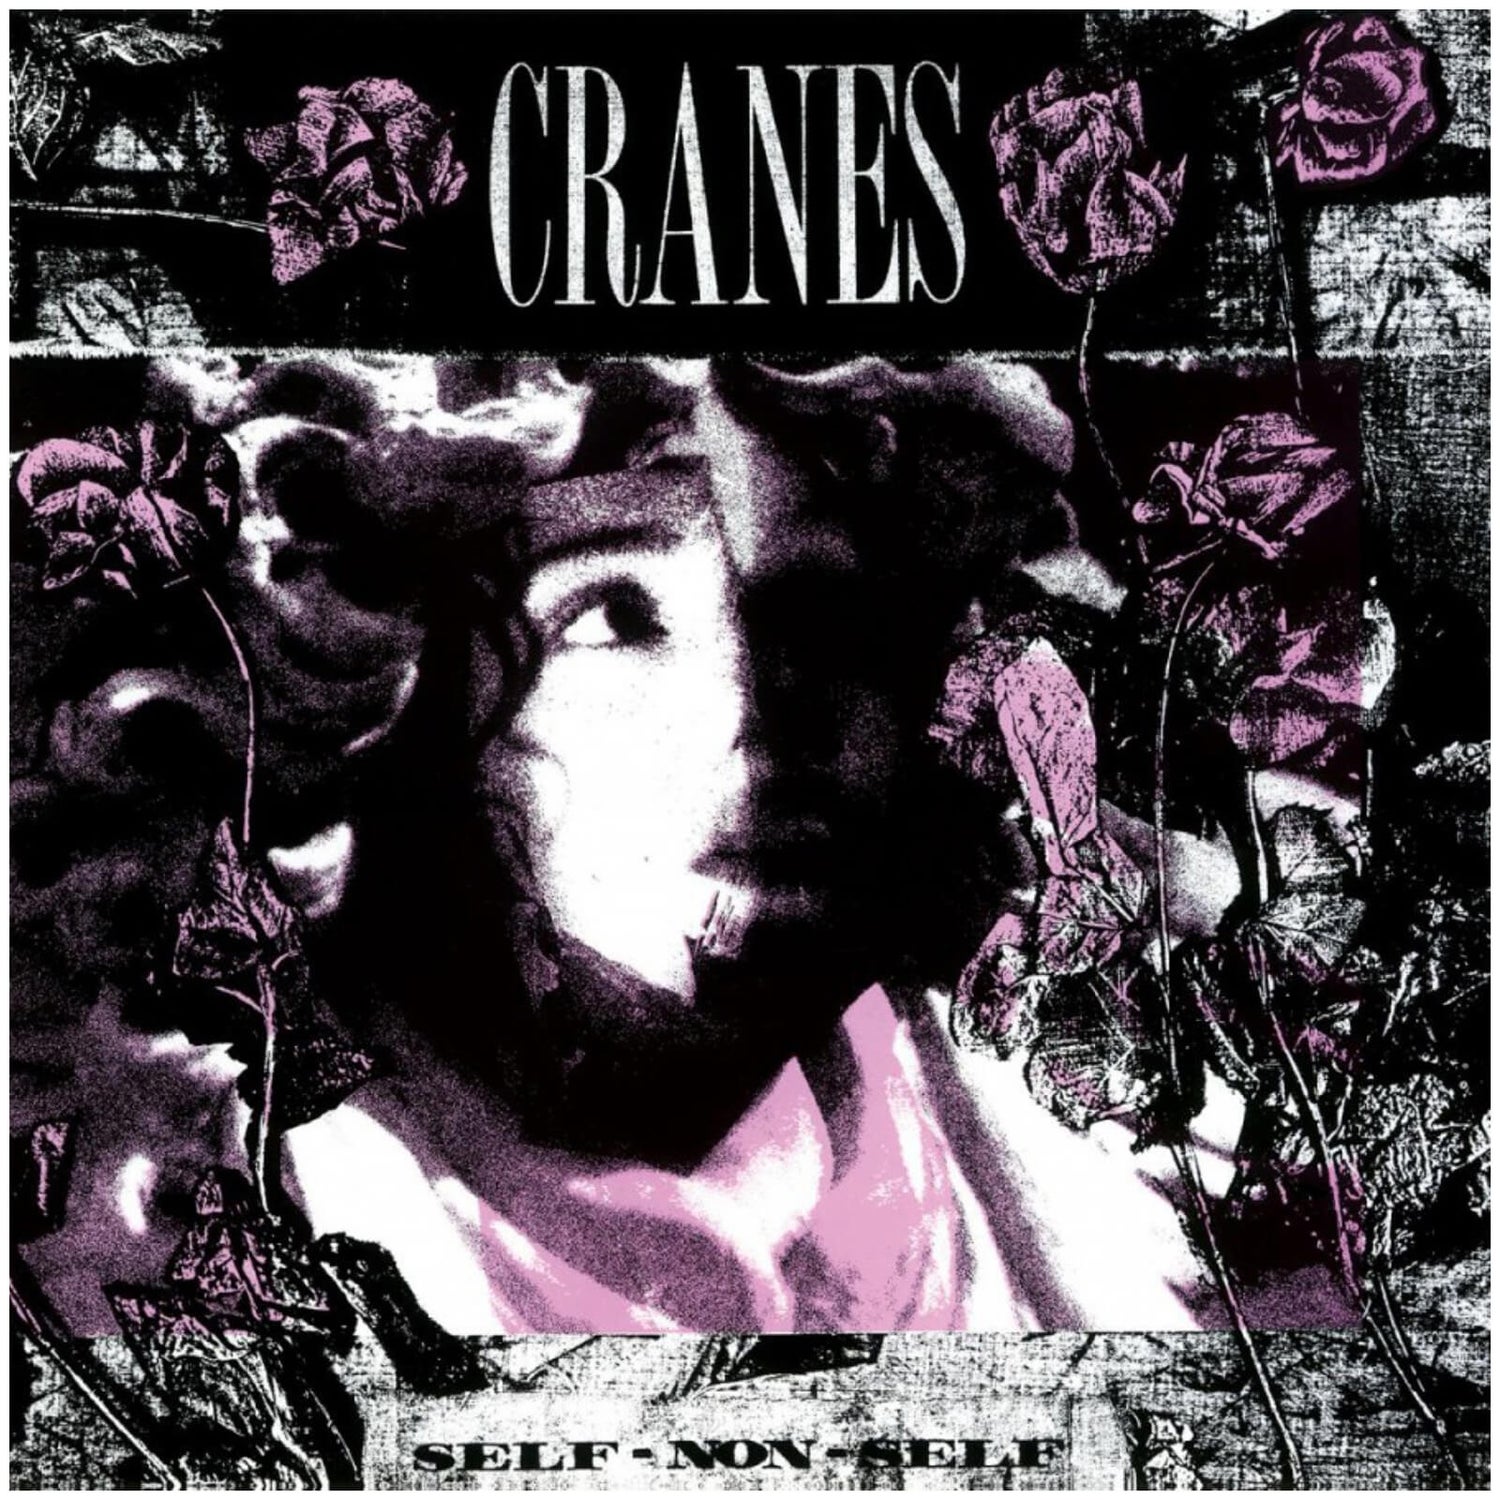 Cranes - Self-Non-Self 180g Vinyl (Clear)